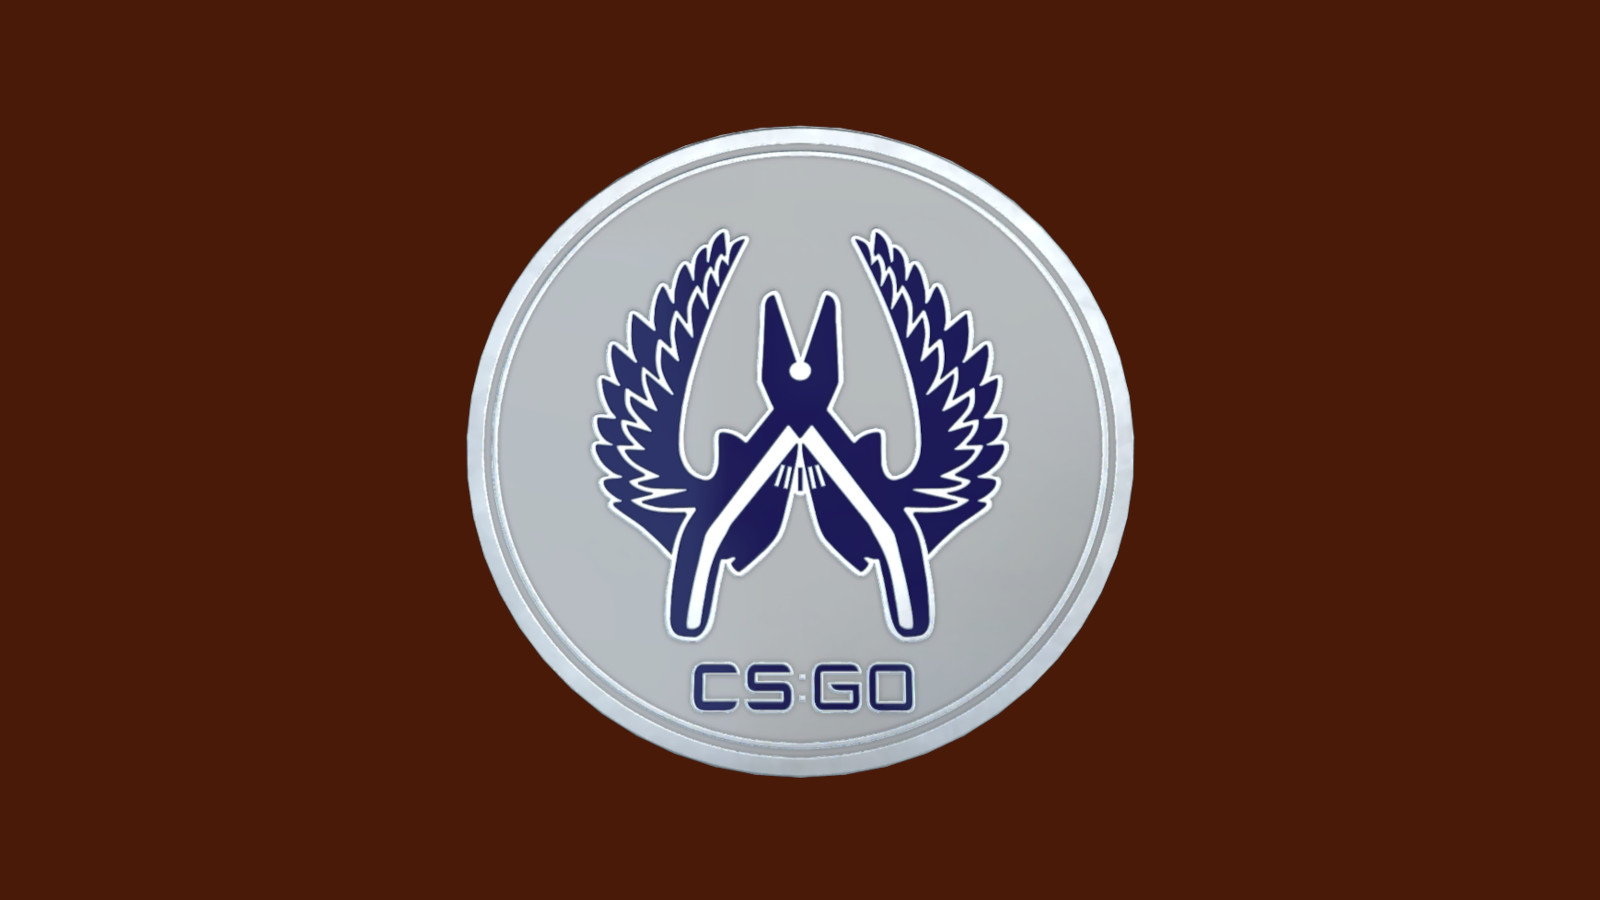 CS:GO - Series 3 - Guardian 3 Collectible Pin, $225.98